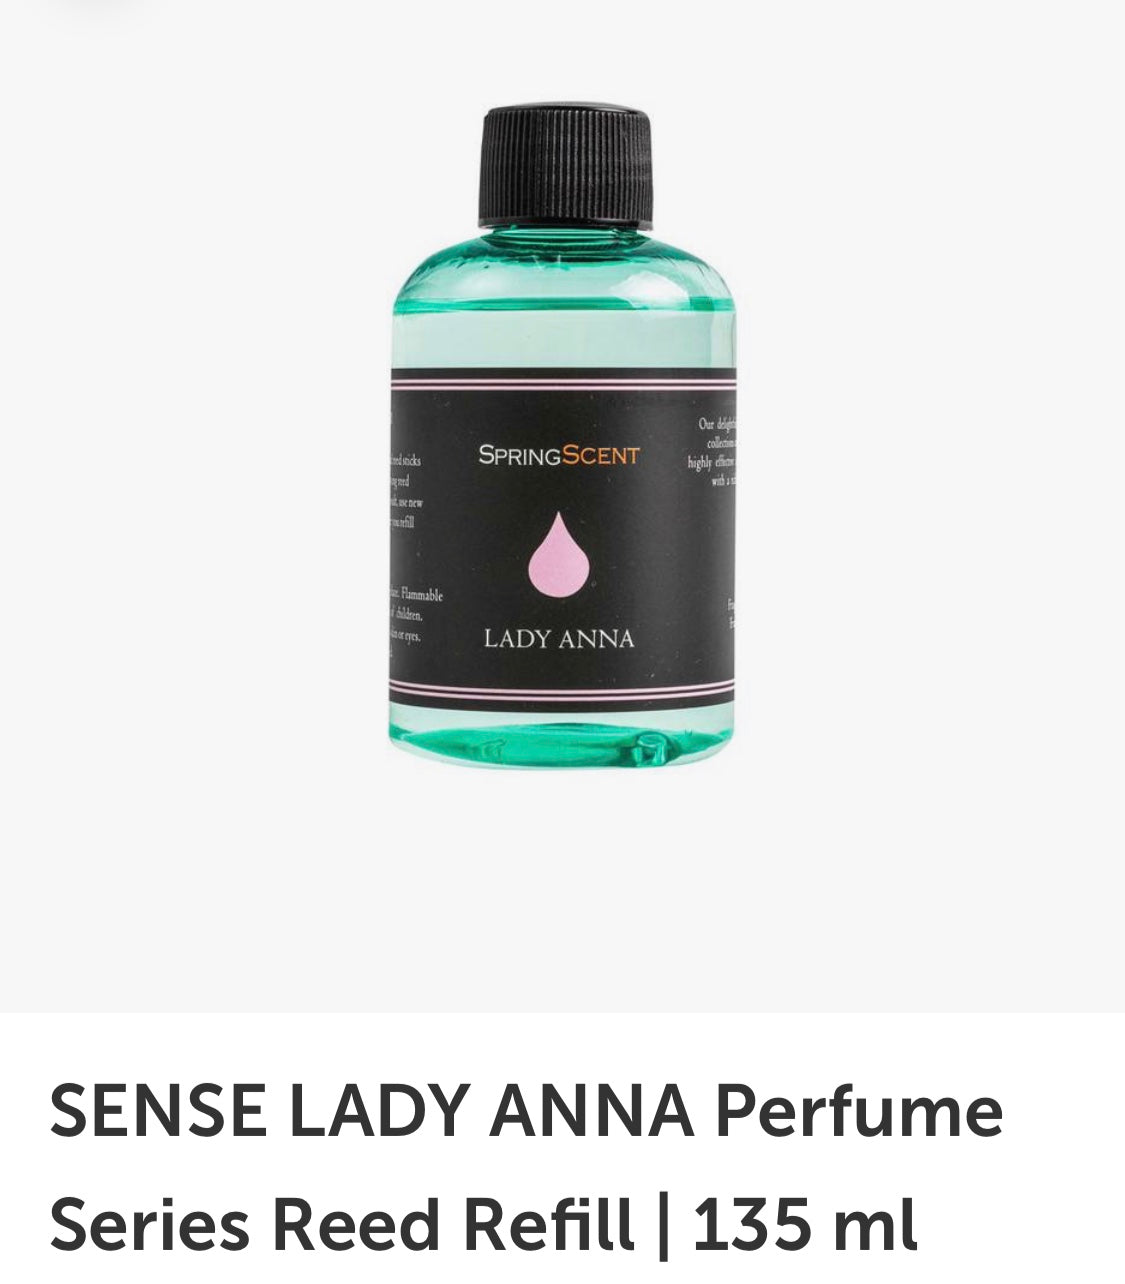 SENSE Perfume Series Reed Refill - The Sense House 